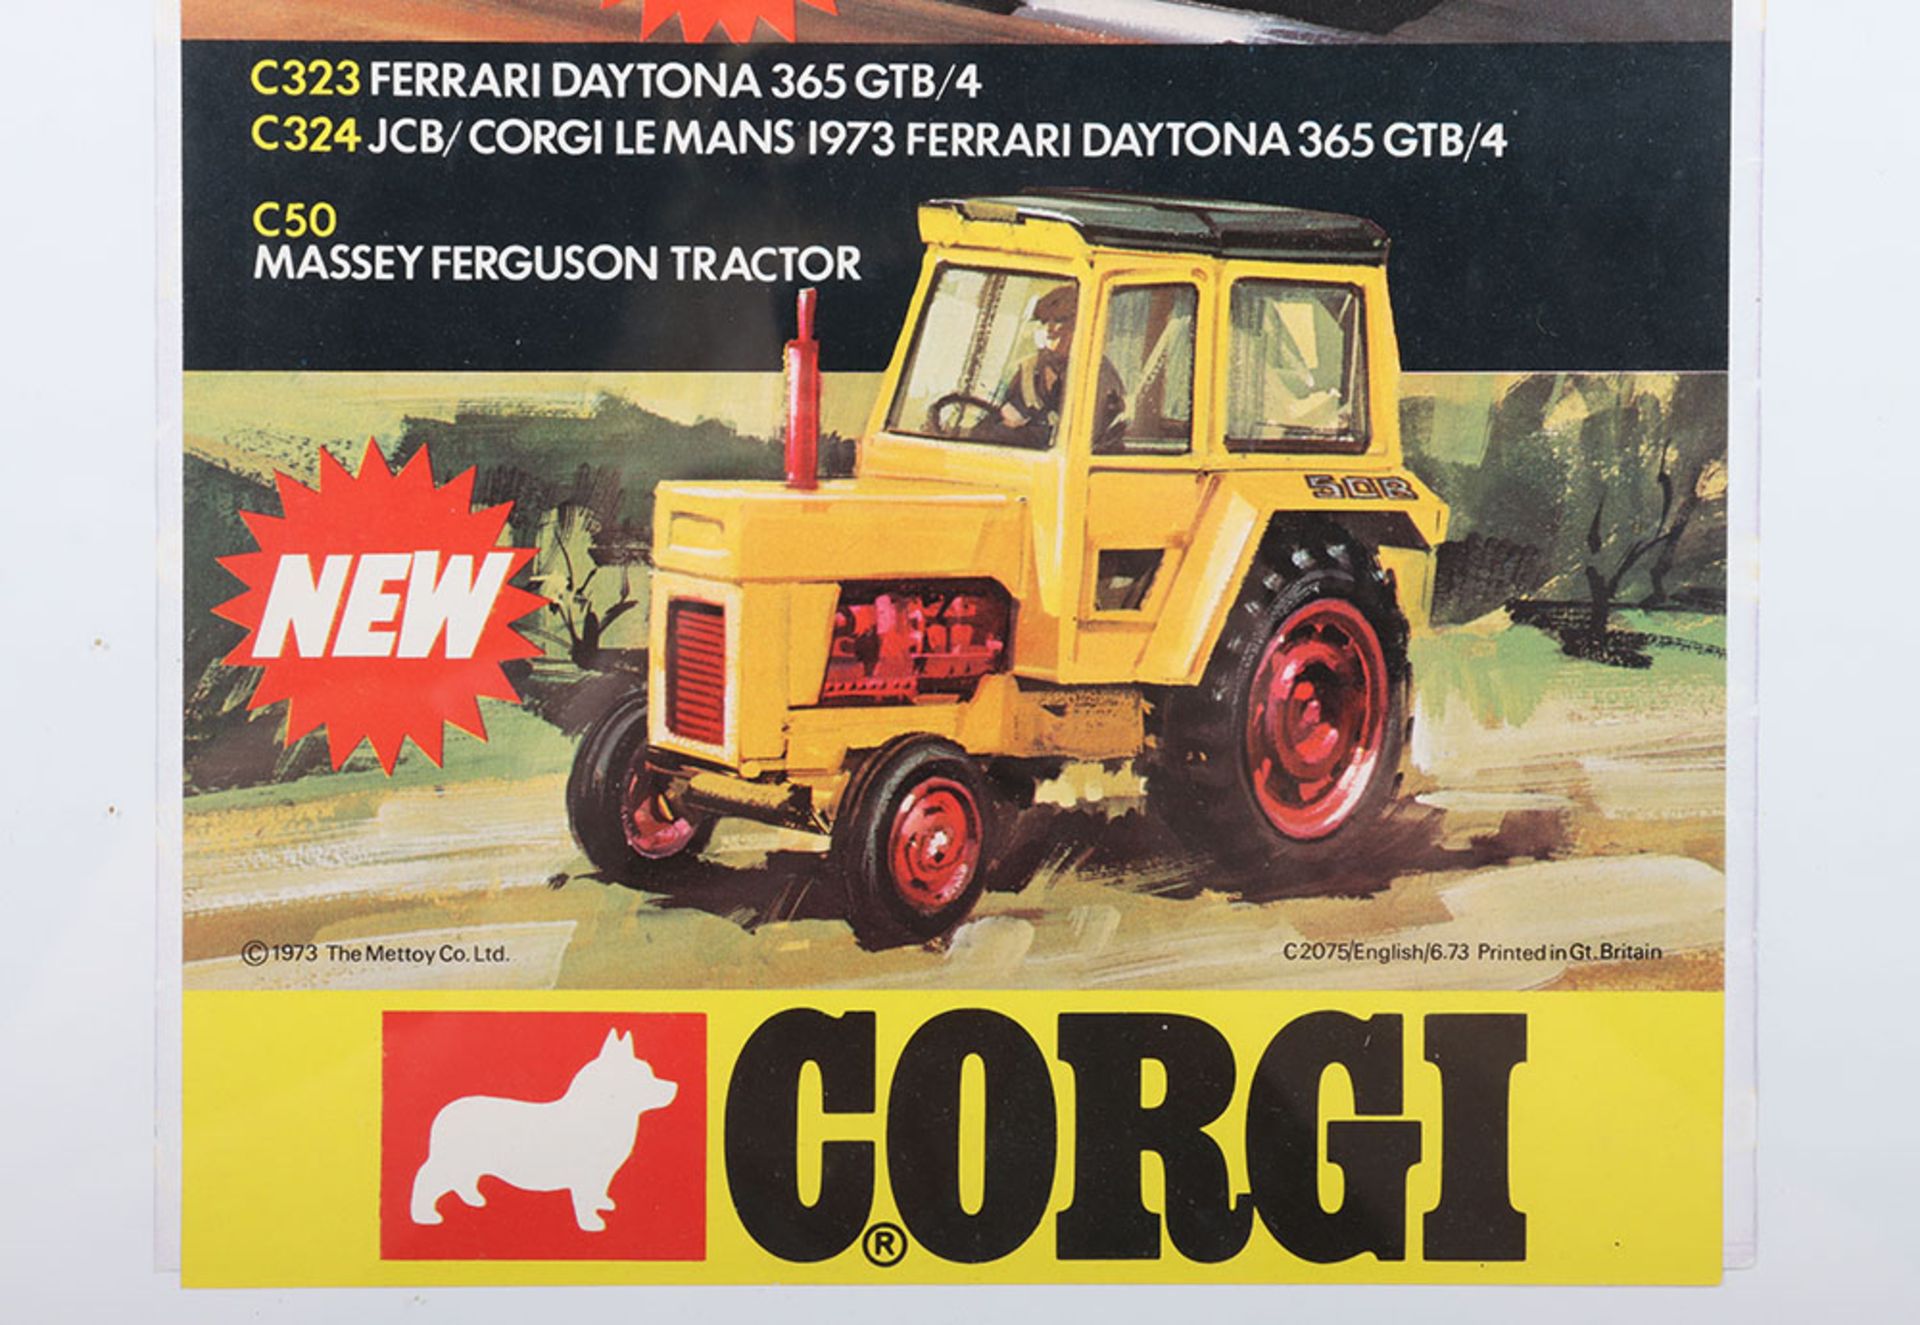 Corgi New C50 Massey Ferguson Tractor original shop poster - Image 3 of 3